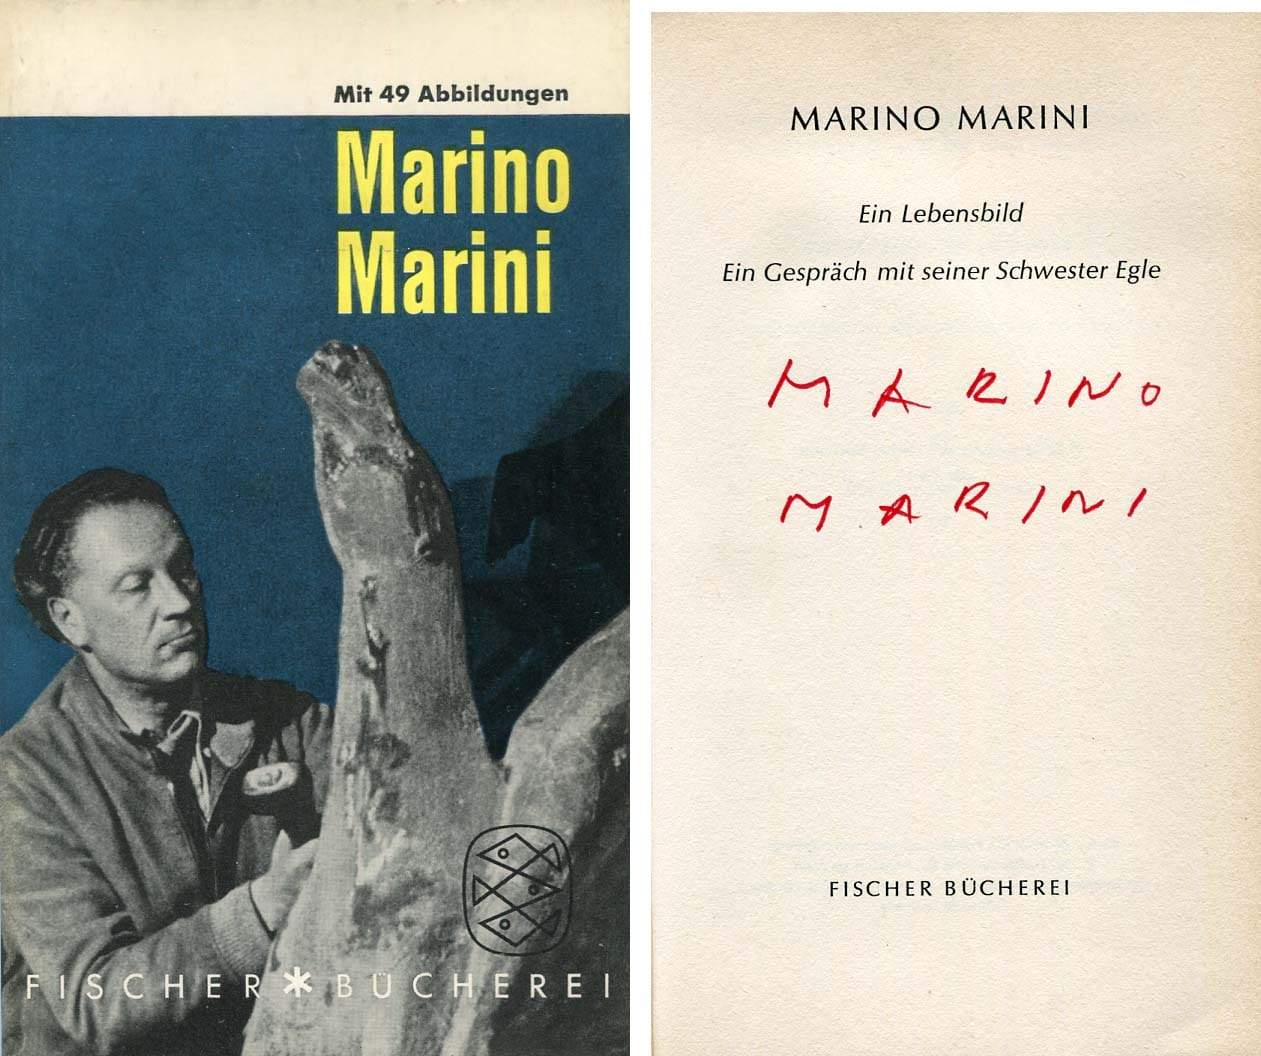 Marino Marini Autograph Autogramm | ID 6908178661525